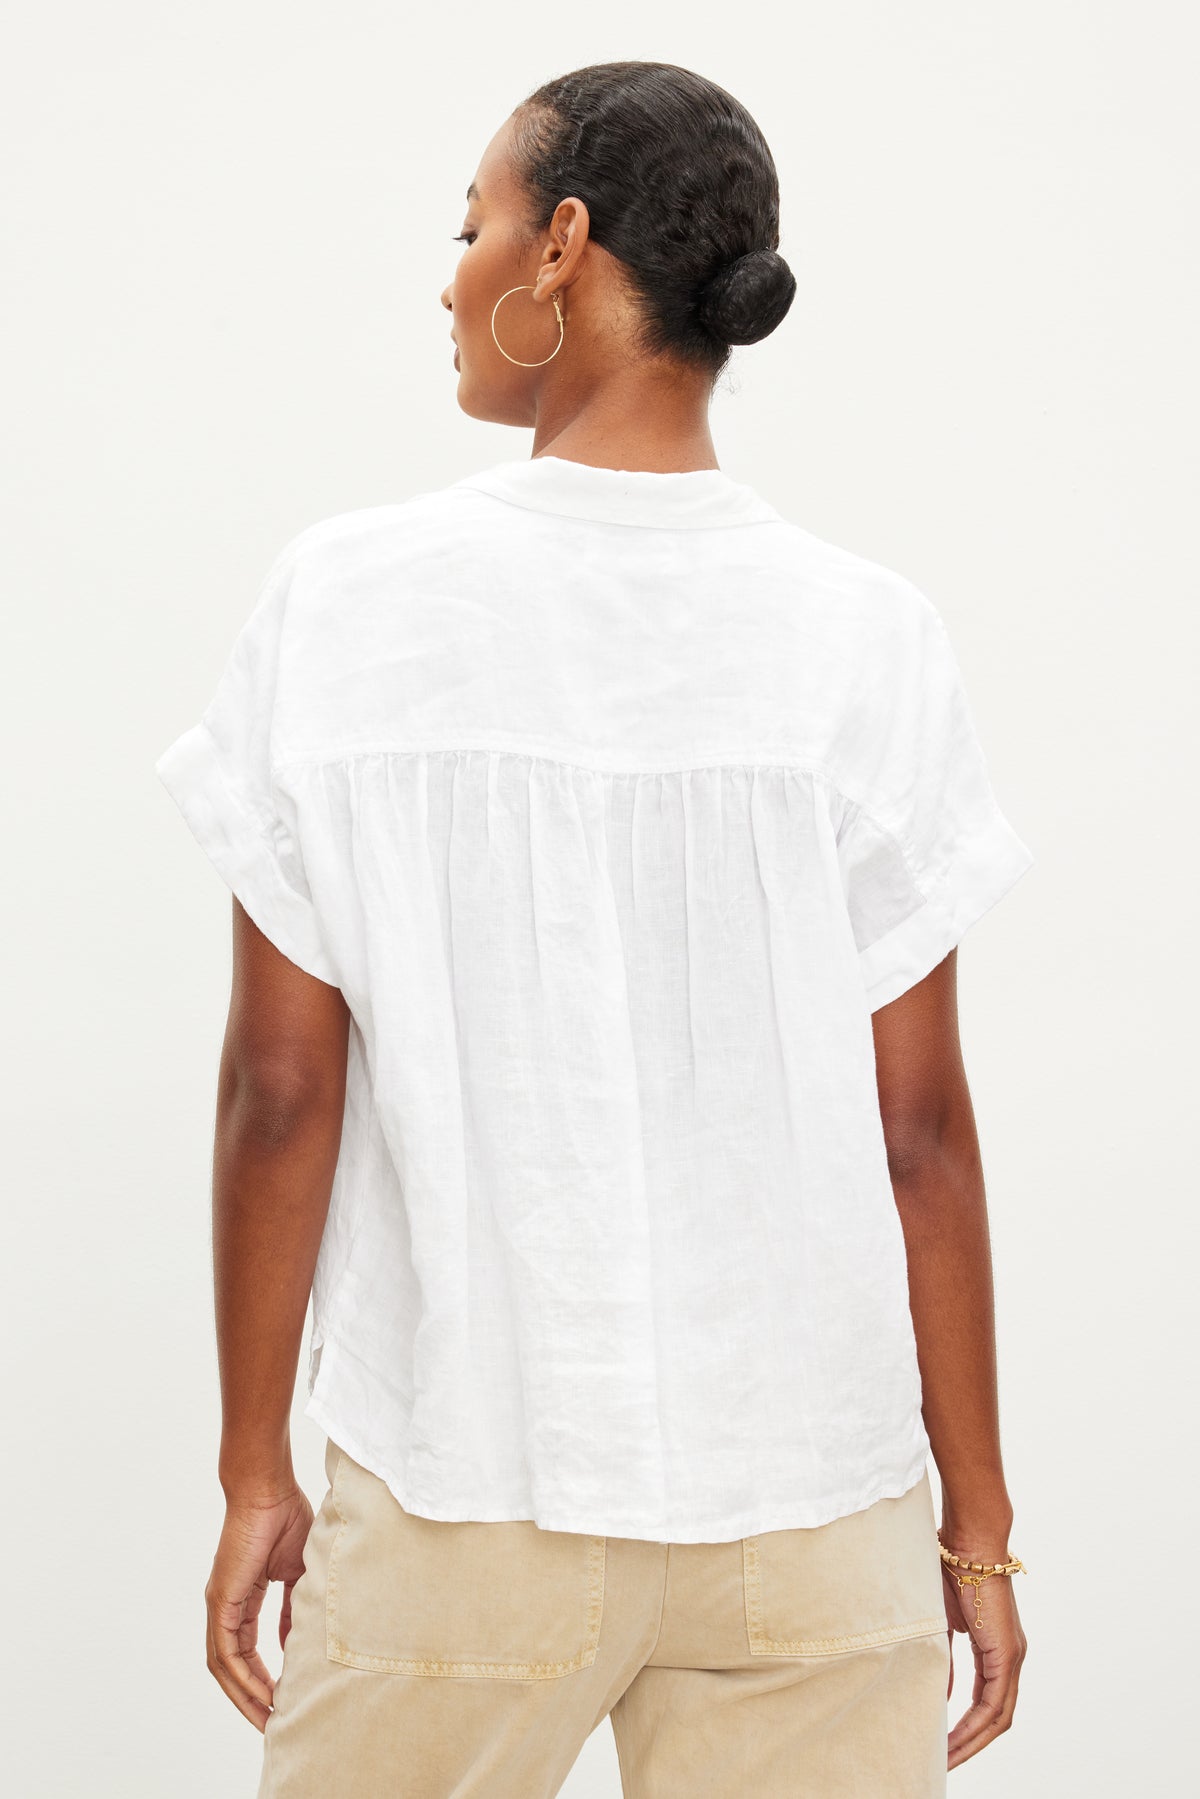 Aria Woven Linen S/S Button Up Top - White